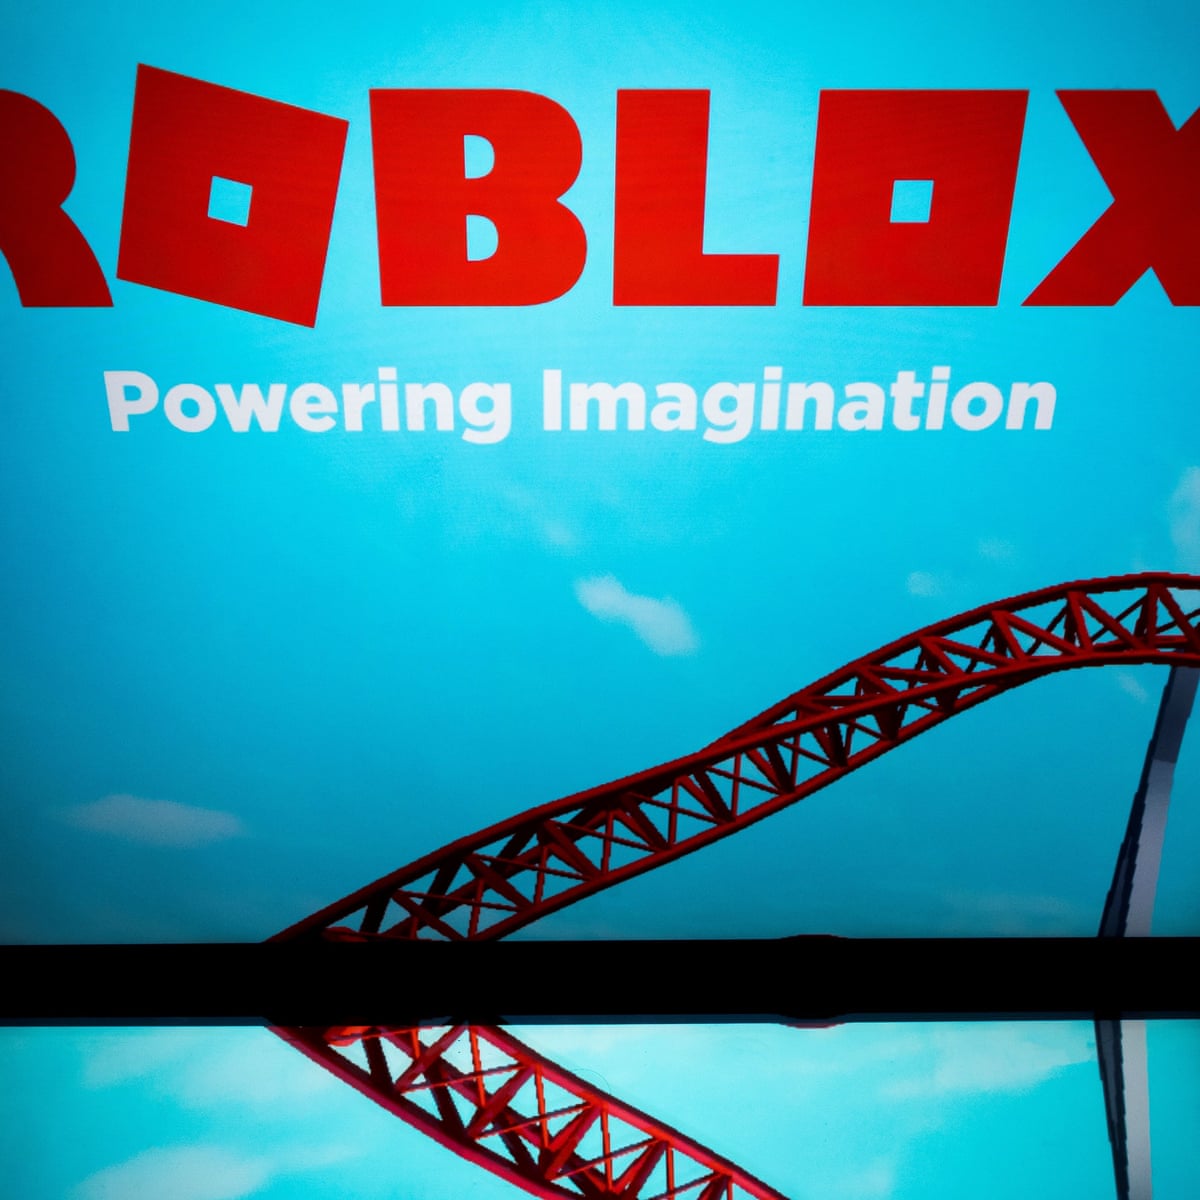 Play Roblox Online No Download